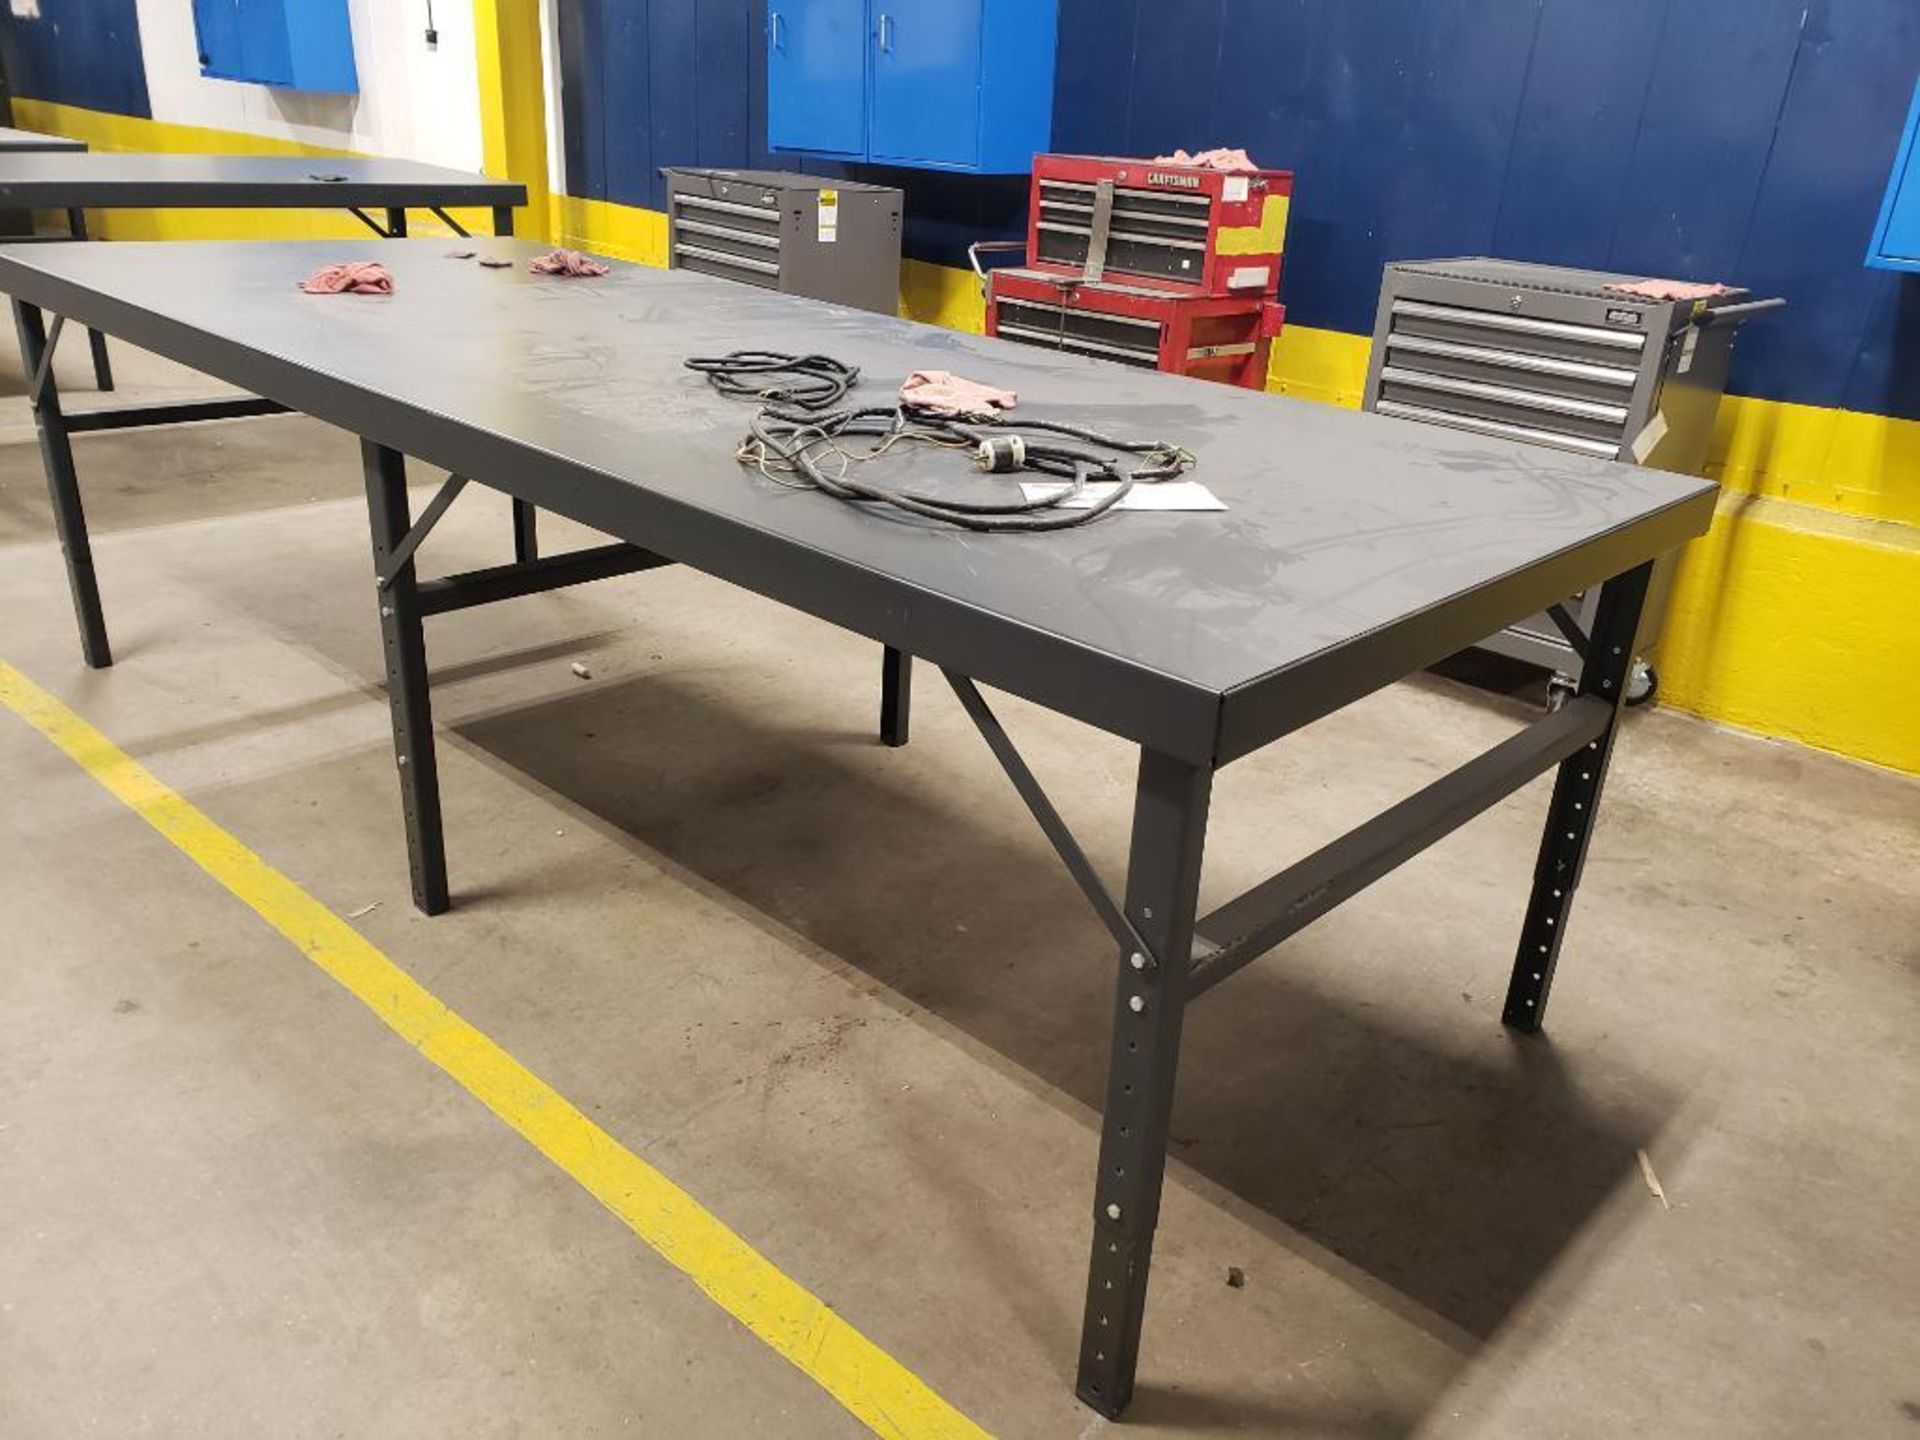 Valleycraft mild steel work table - Image 2 of 4